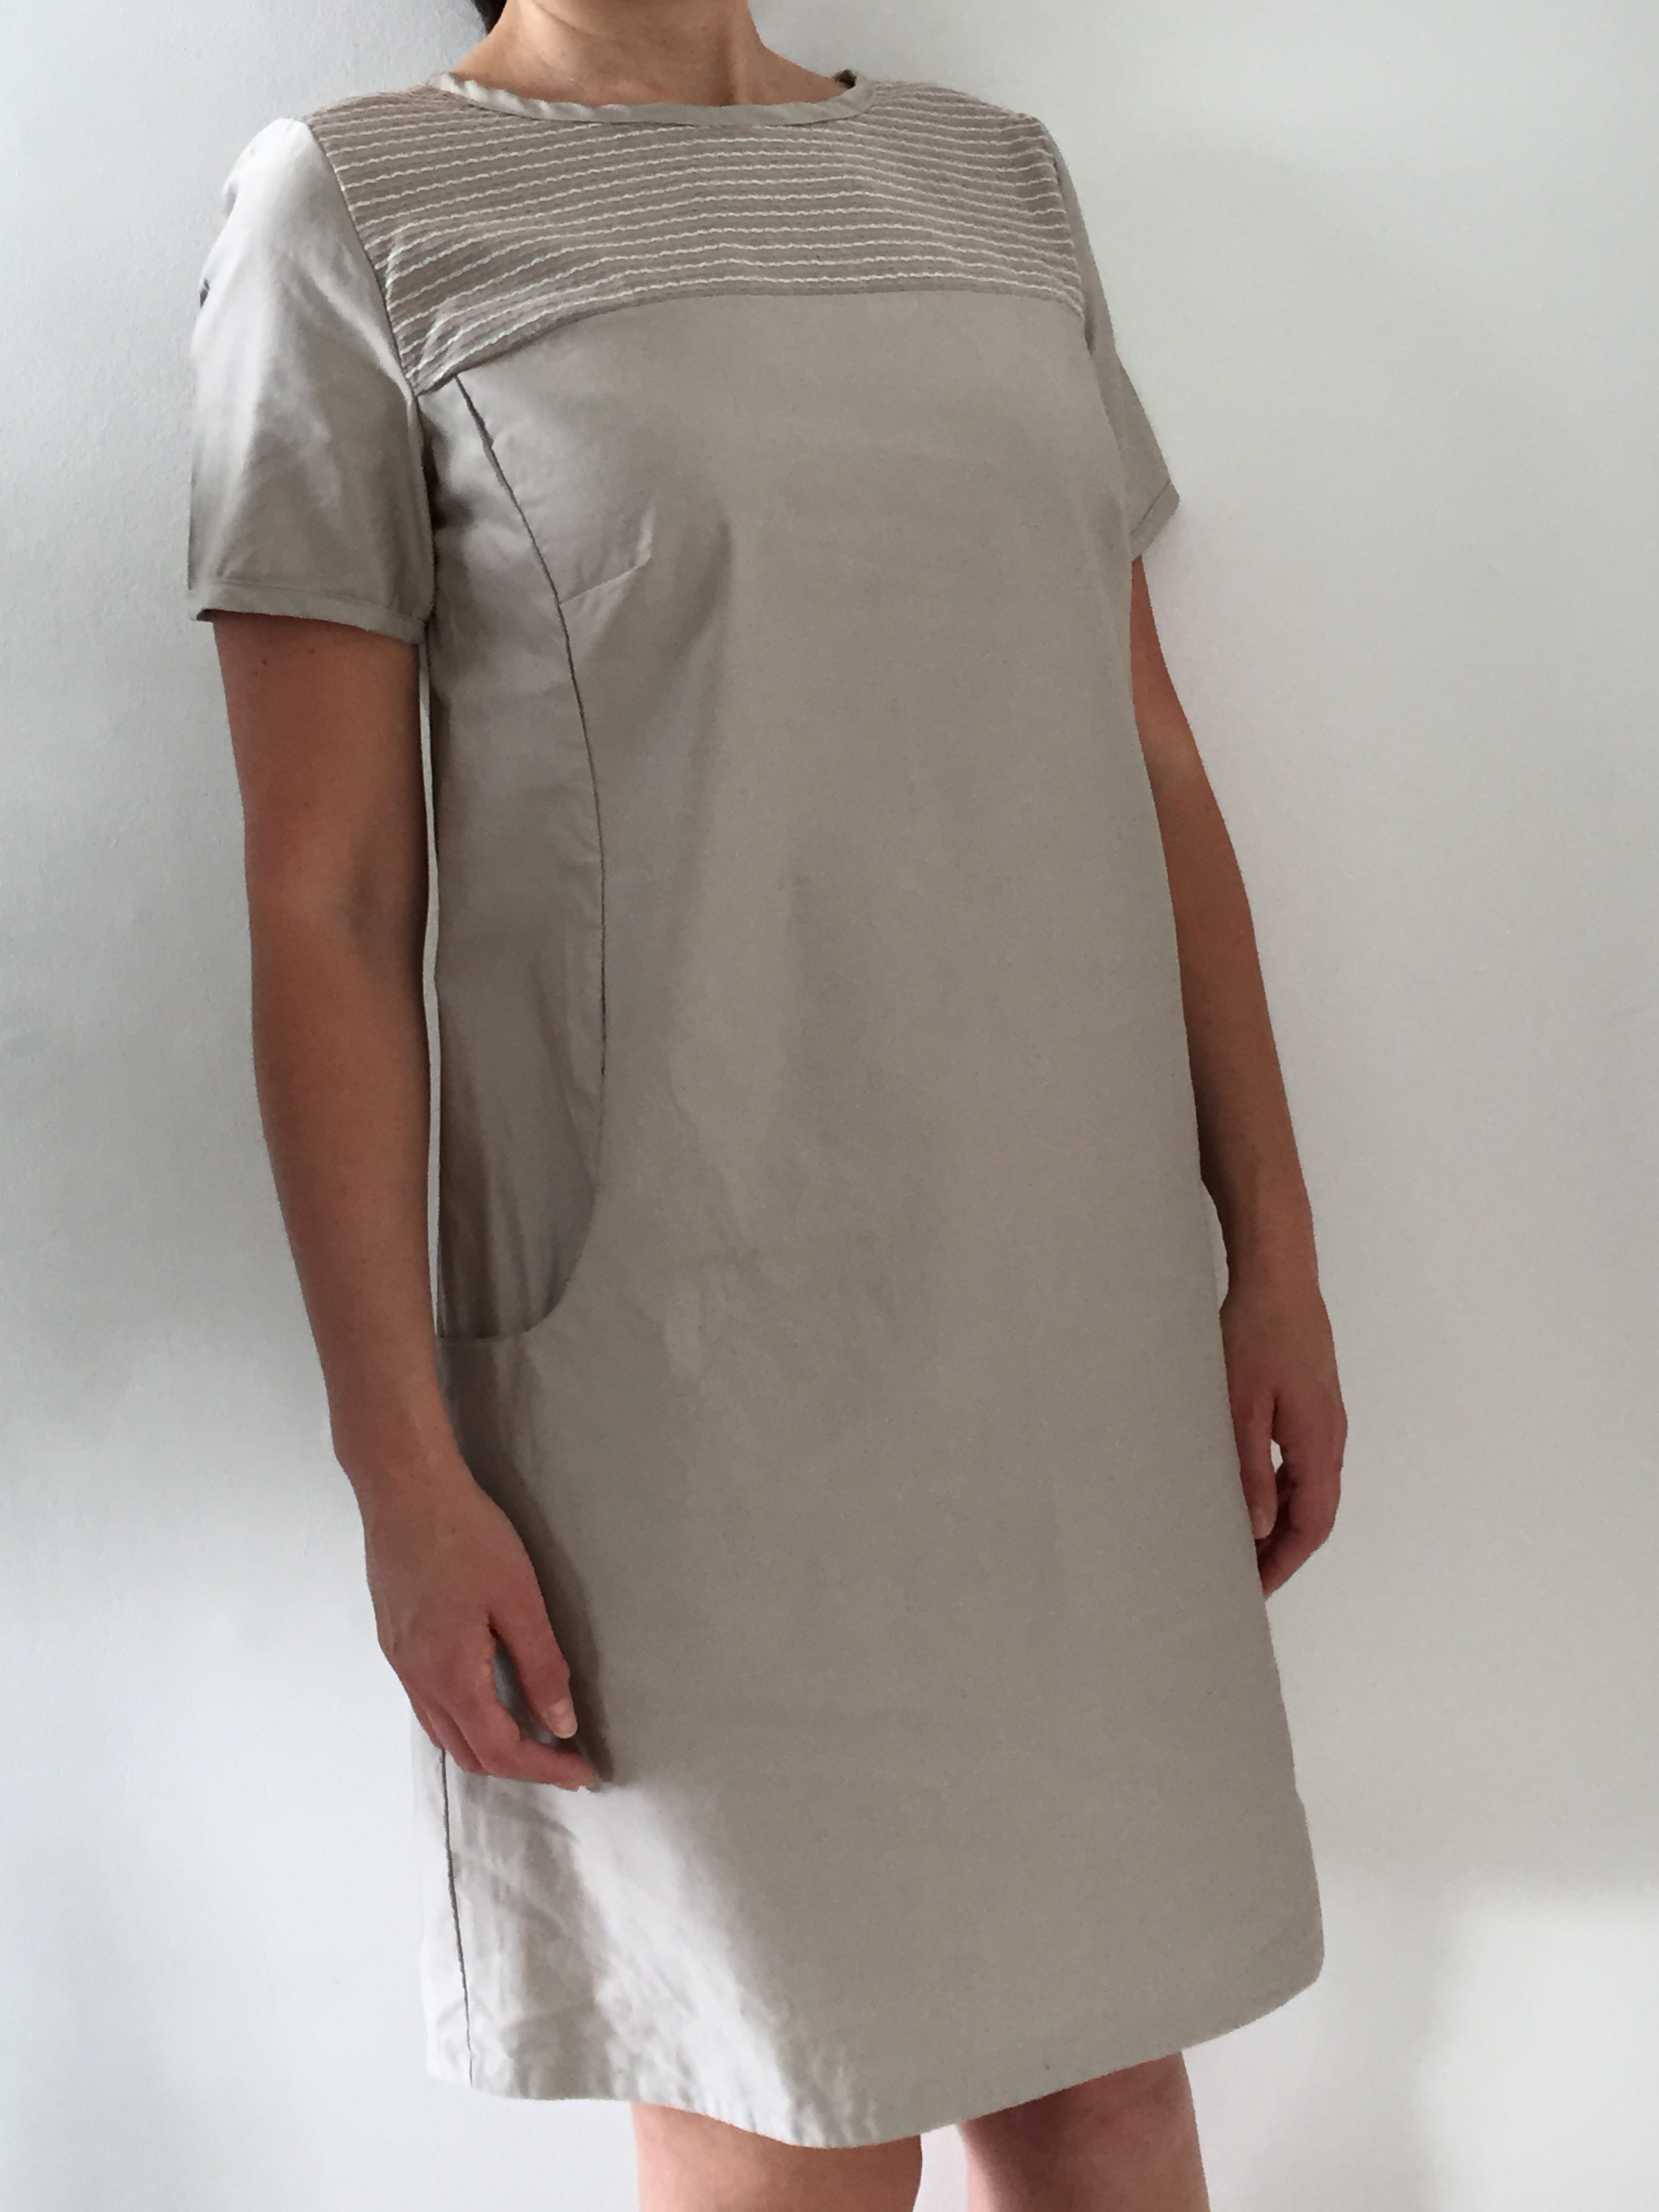 Xerea dress - Pauline Alice – Sewing Projects | BurdaStyle.com